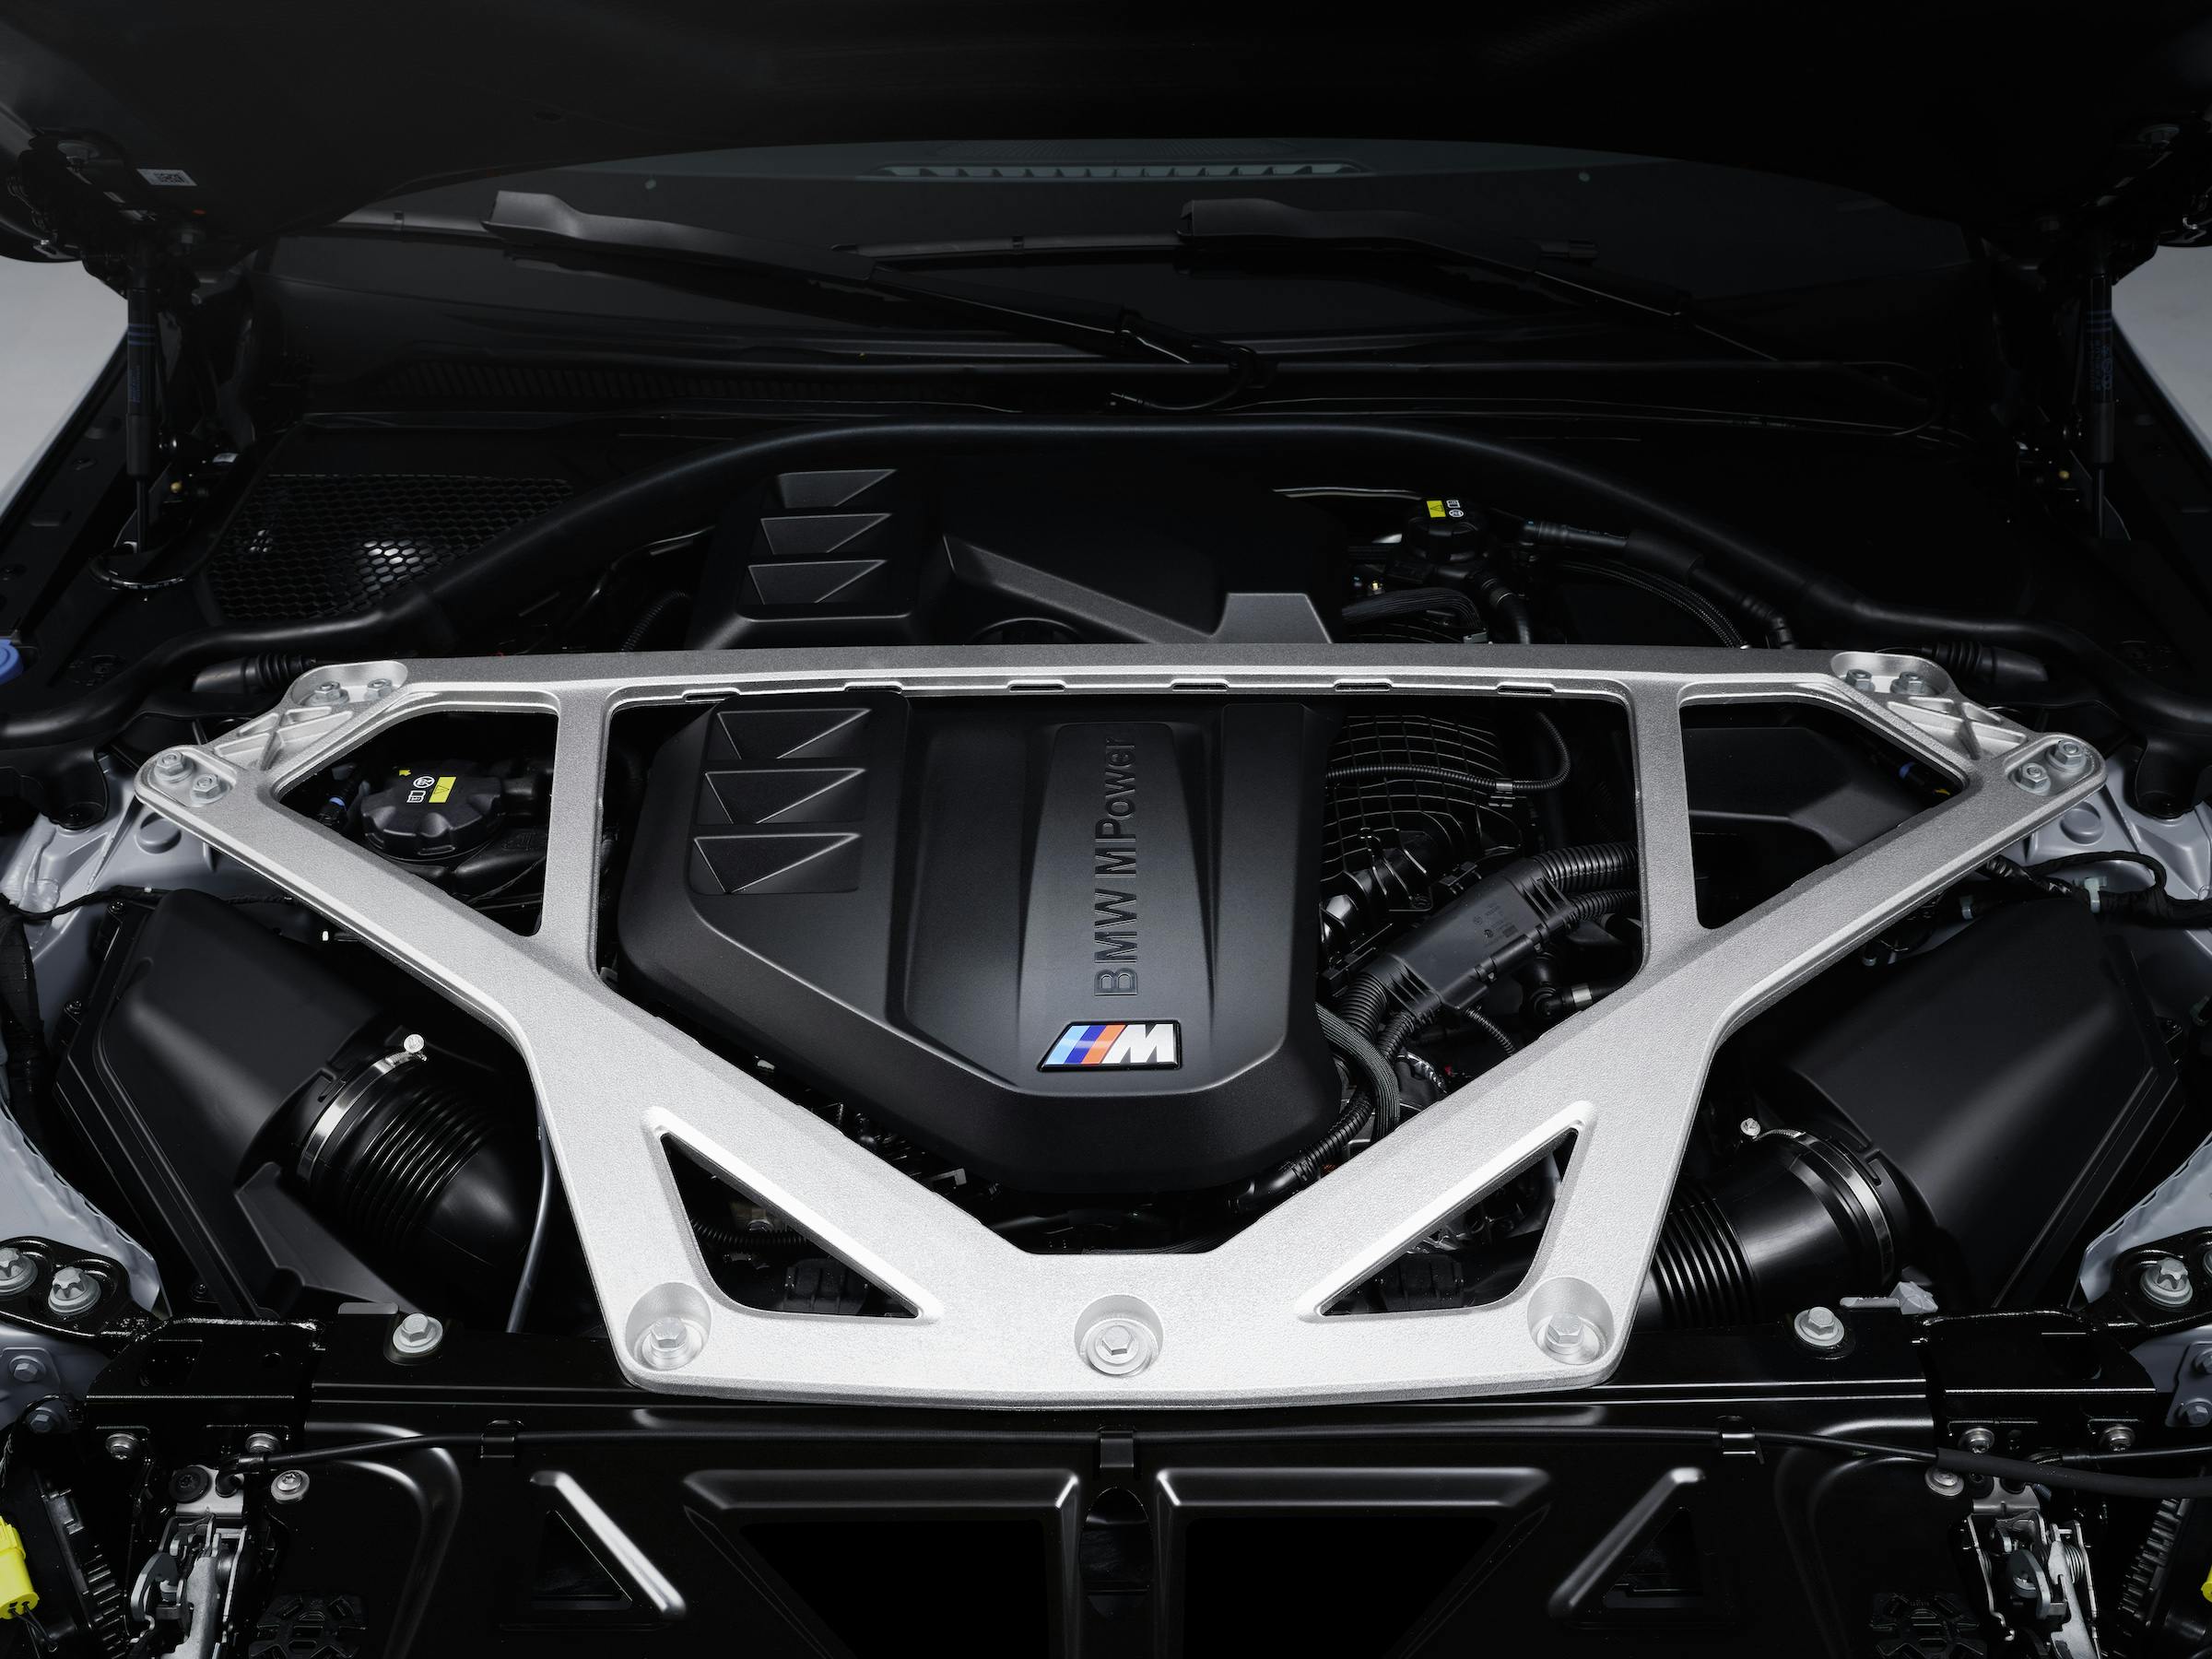 BMW M4 CSL Coupe engine bay